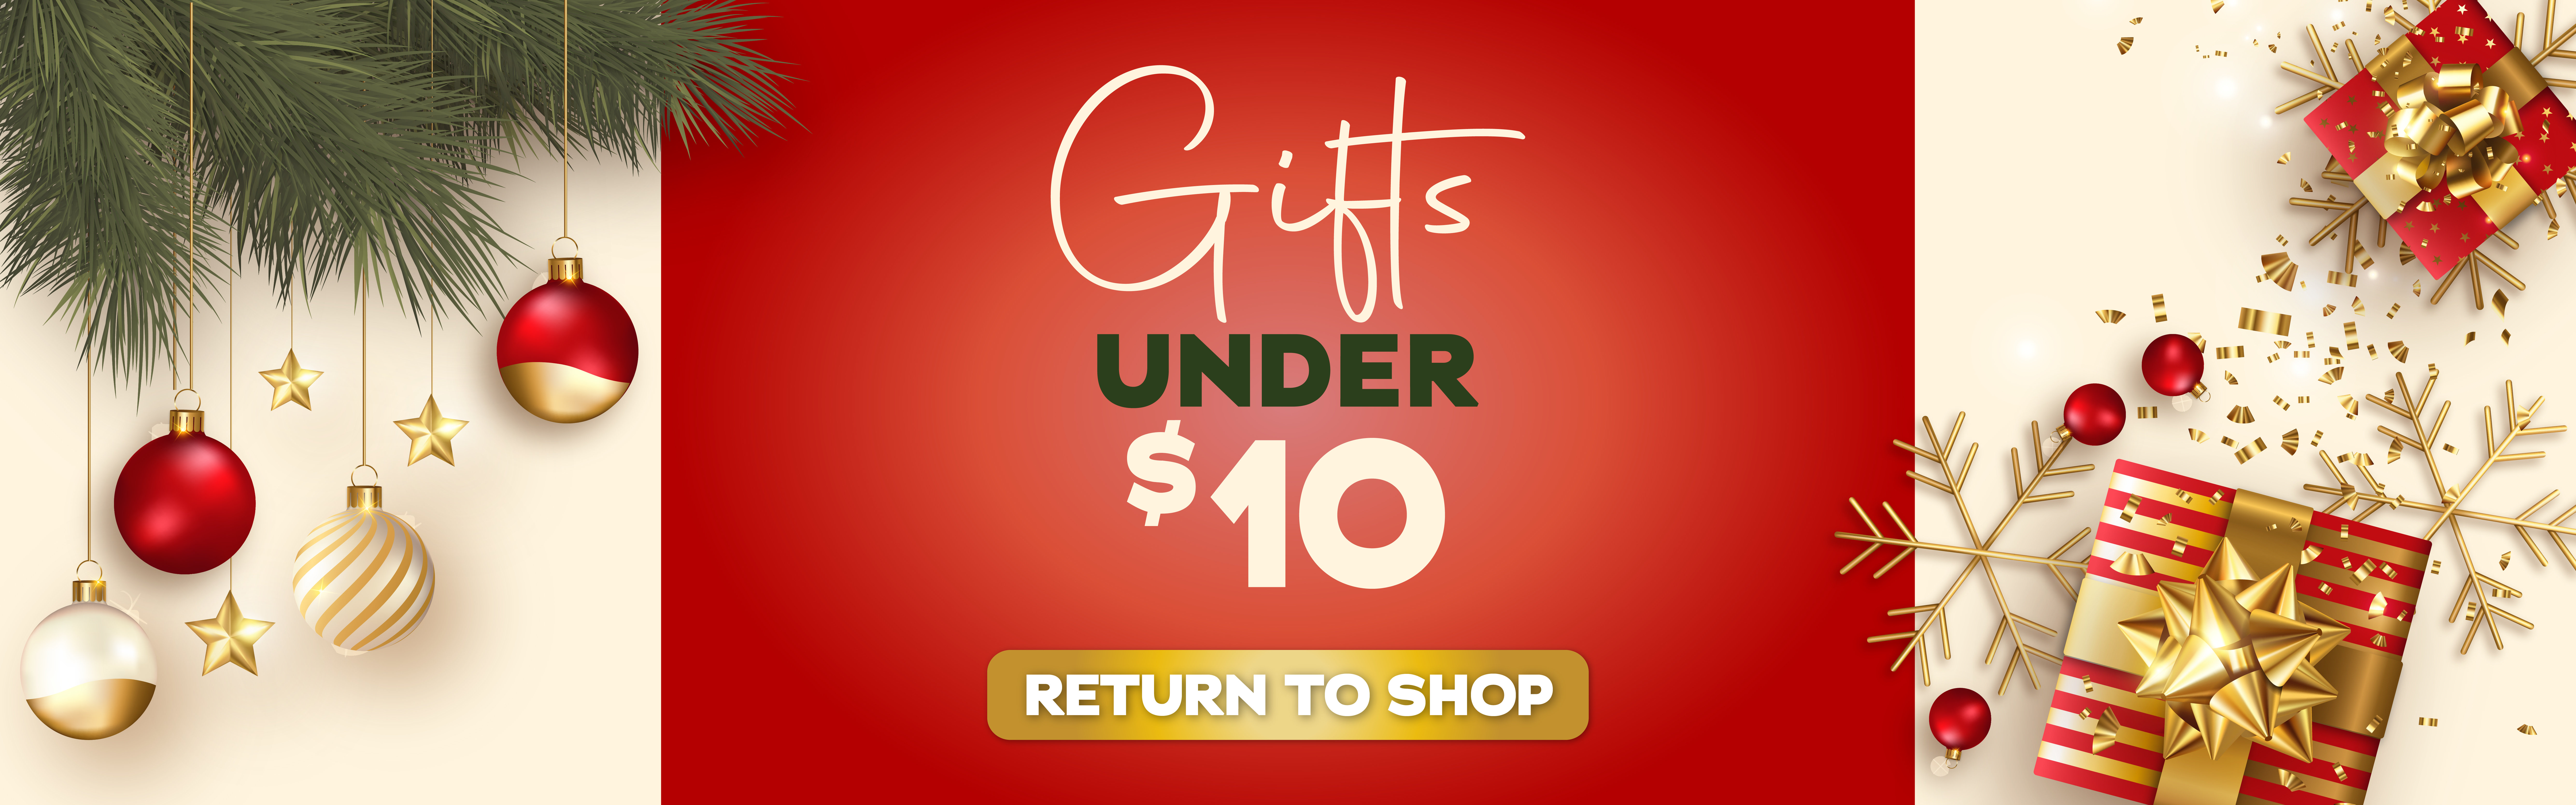 Gifts Under $10 - Return to Shop